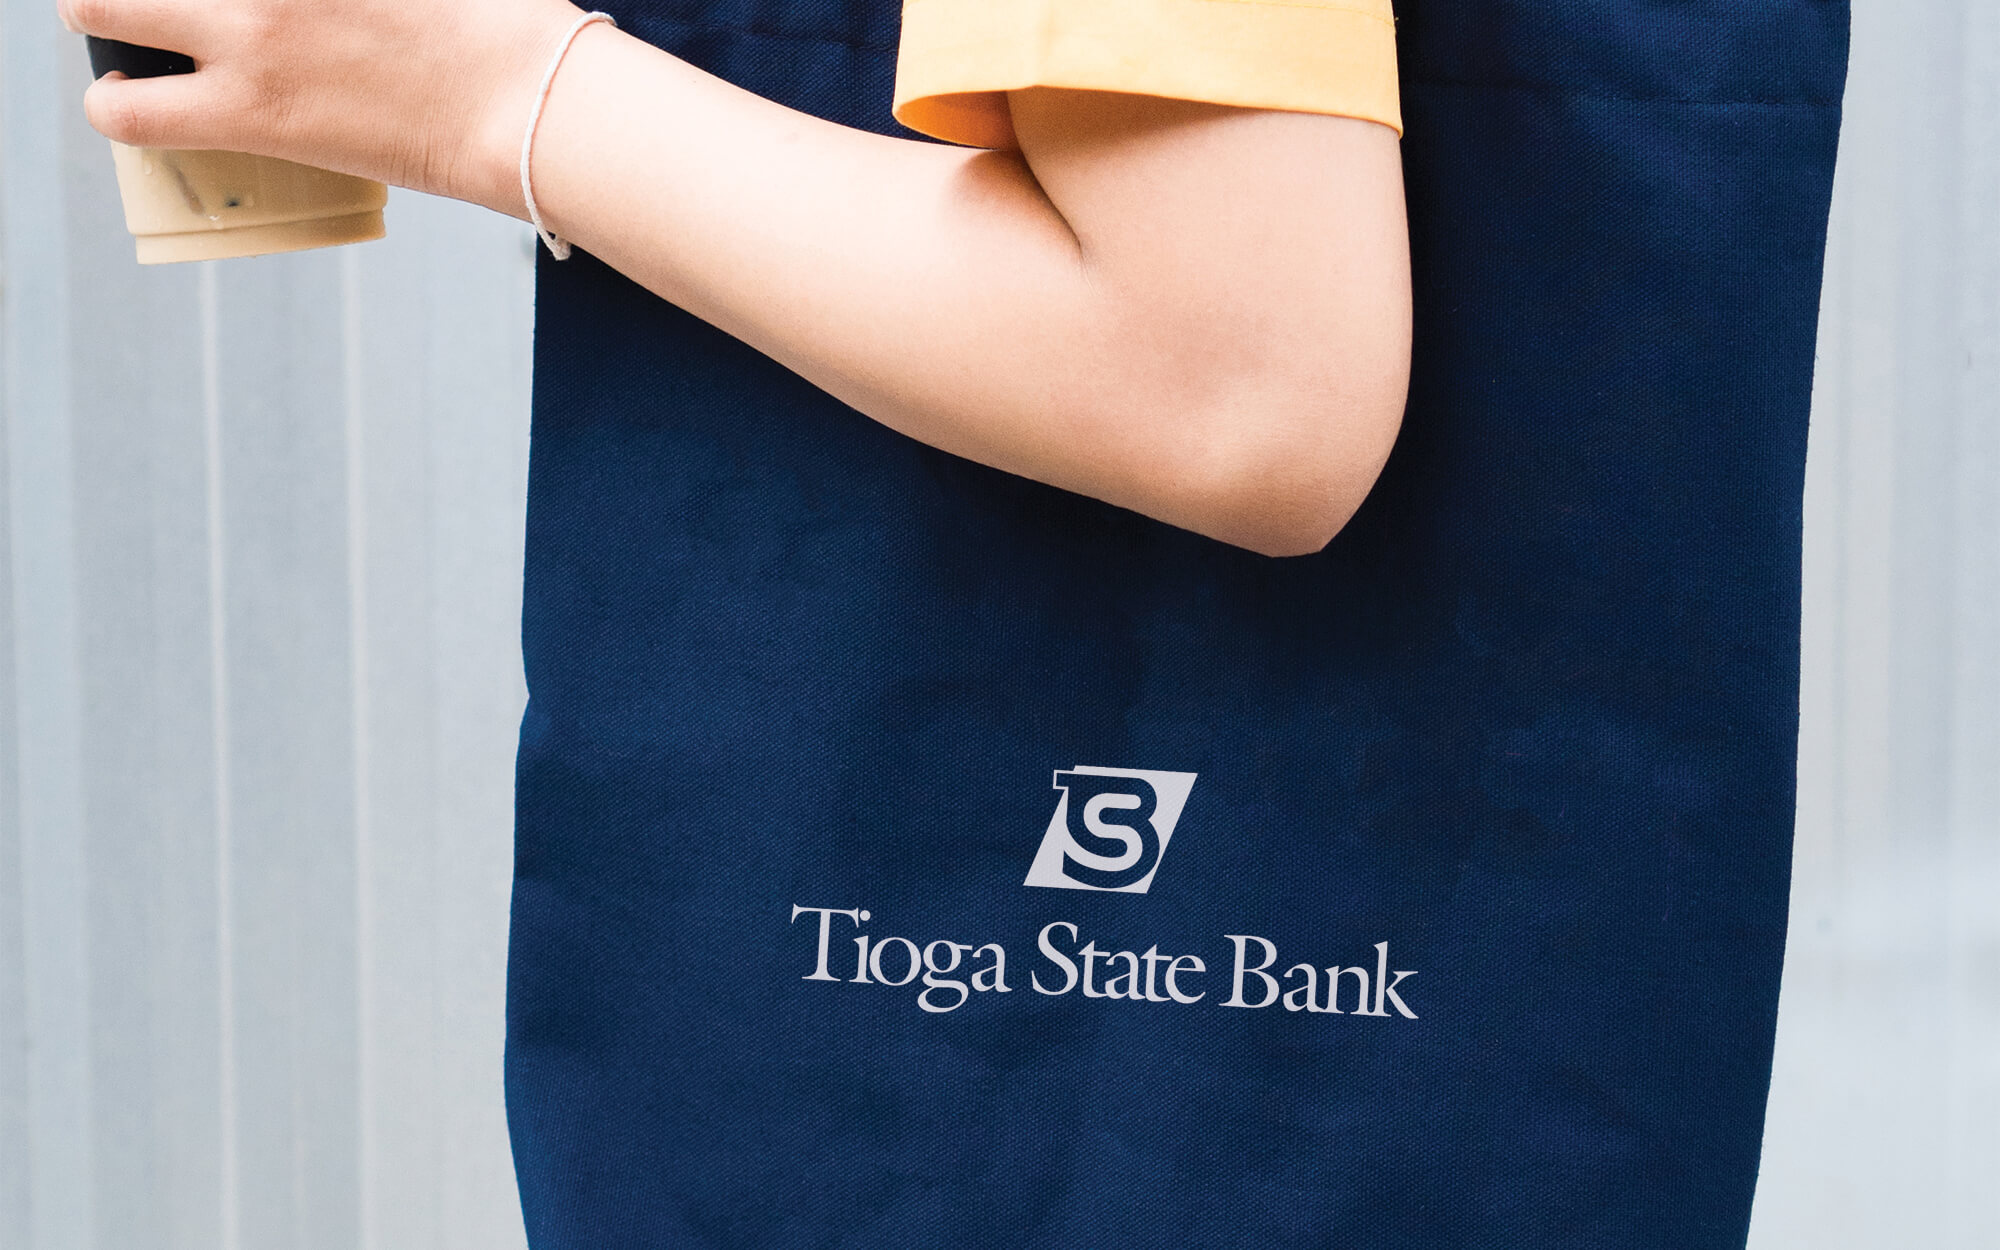 Tioga State Bank tote bag